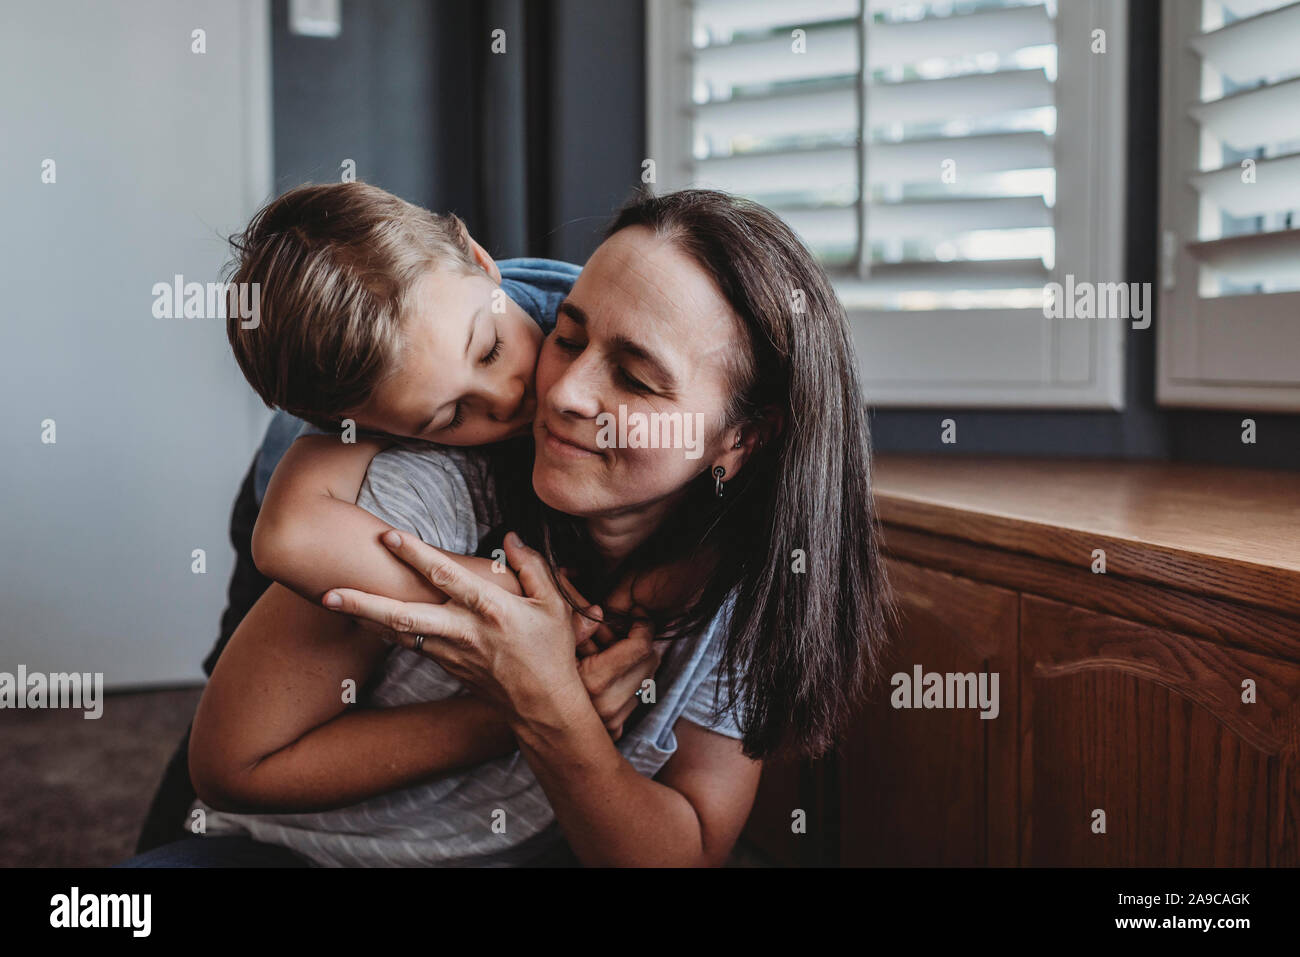 Loving hug between mid-40â€™s mom and 5 yr old son near widow shutters Stock Photo